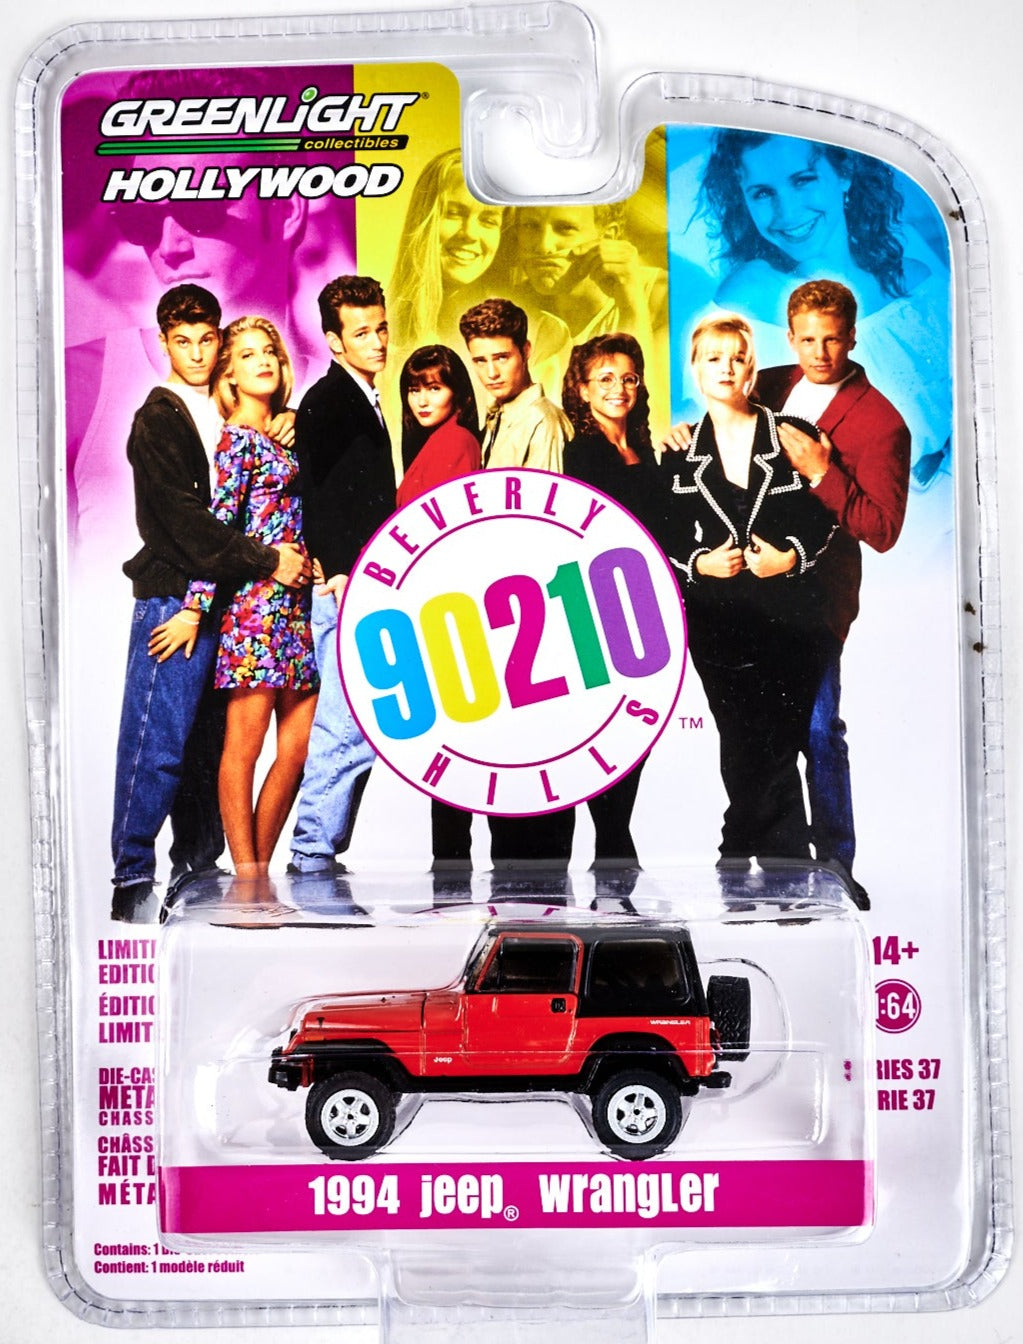 1994 Jeep Wrangler - Beverly Hills 90210